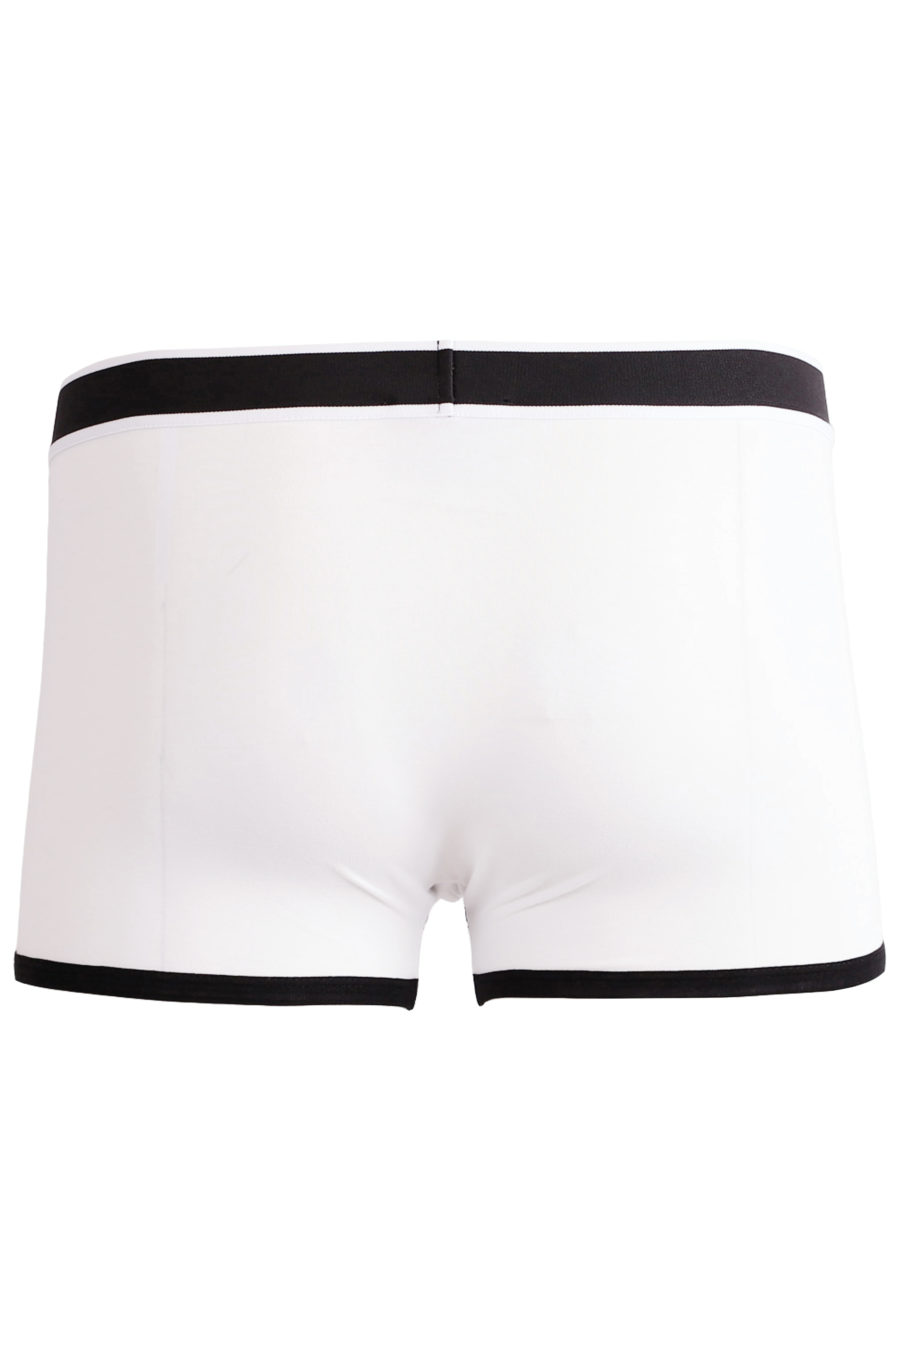 Conjunto de dois boxers brancos com logótipo na cintura - fe89fea661083aa9023fa2e6e451382a0a6ac609